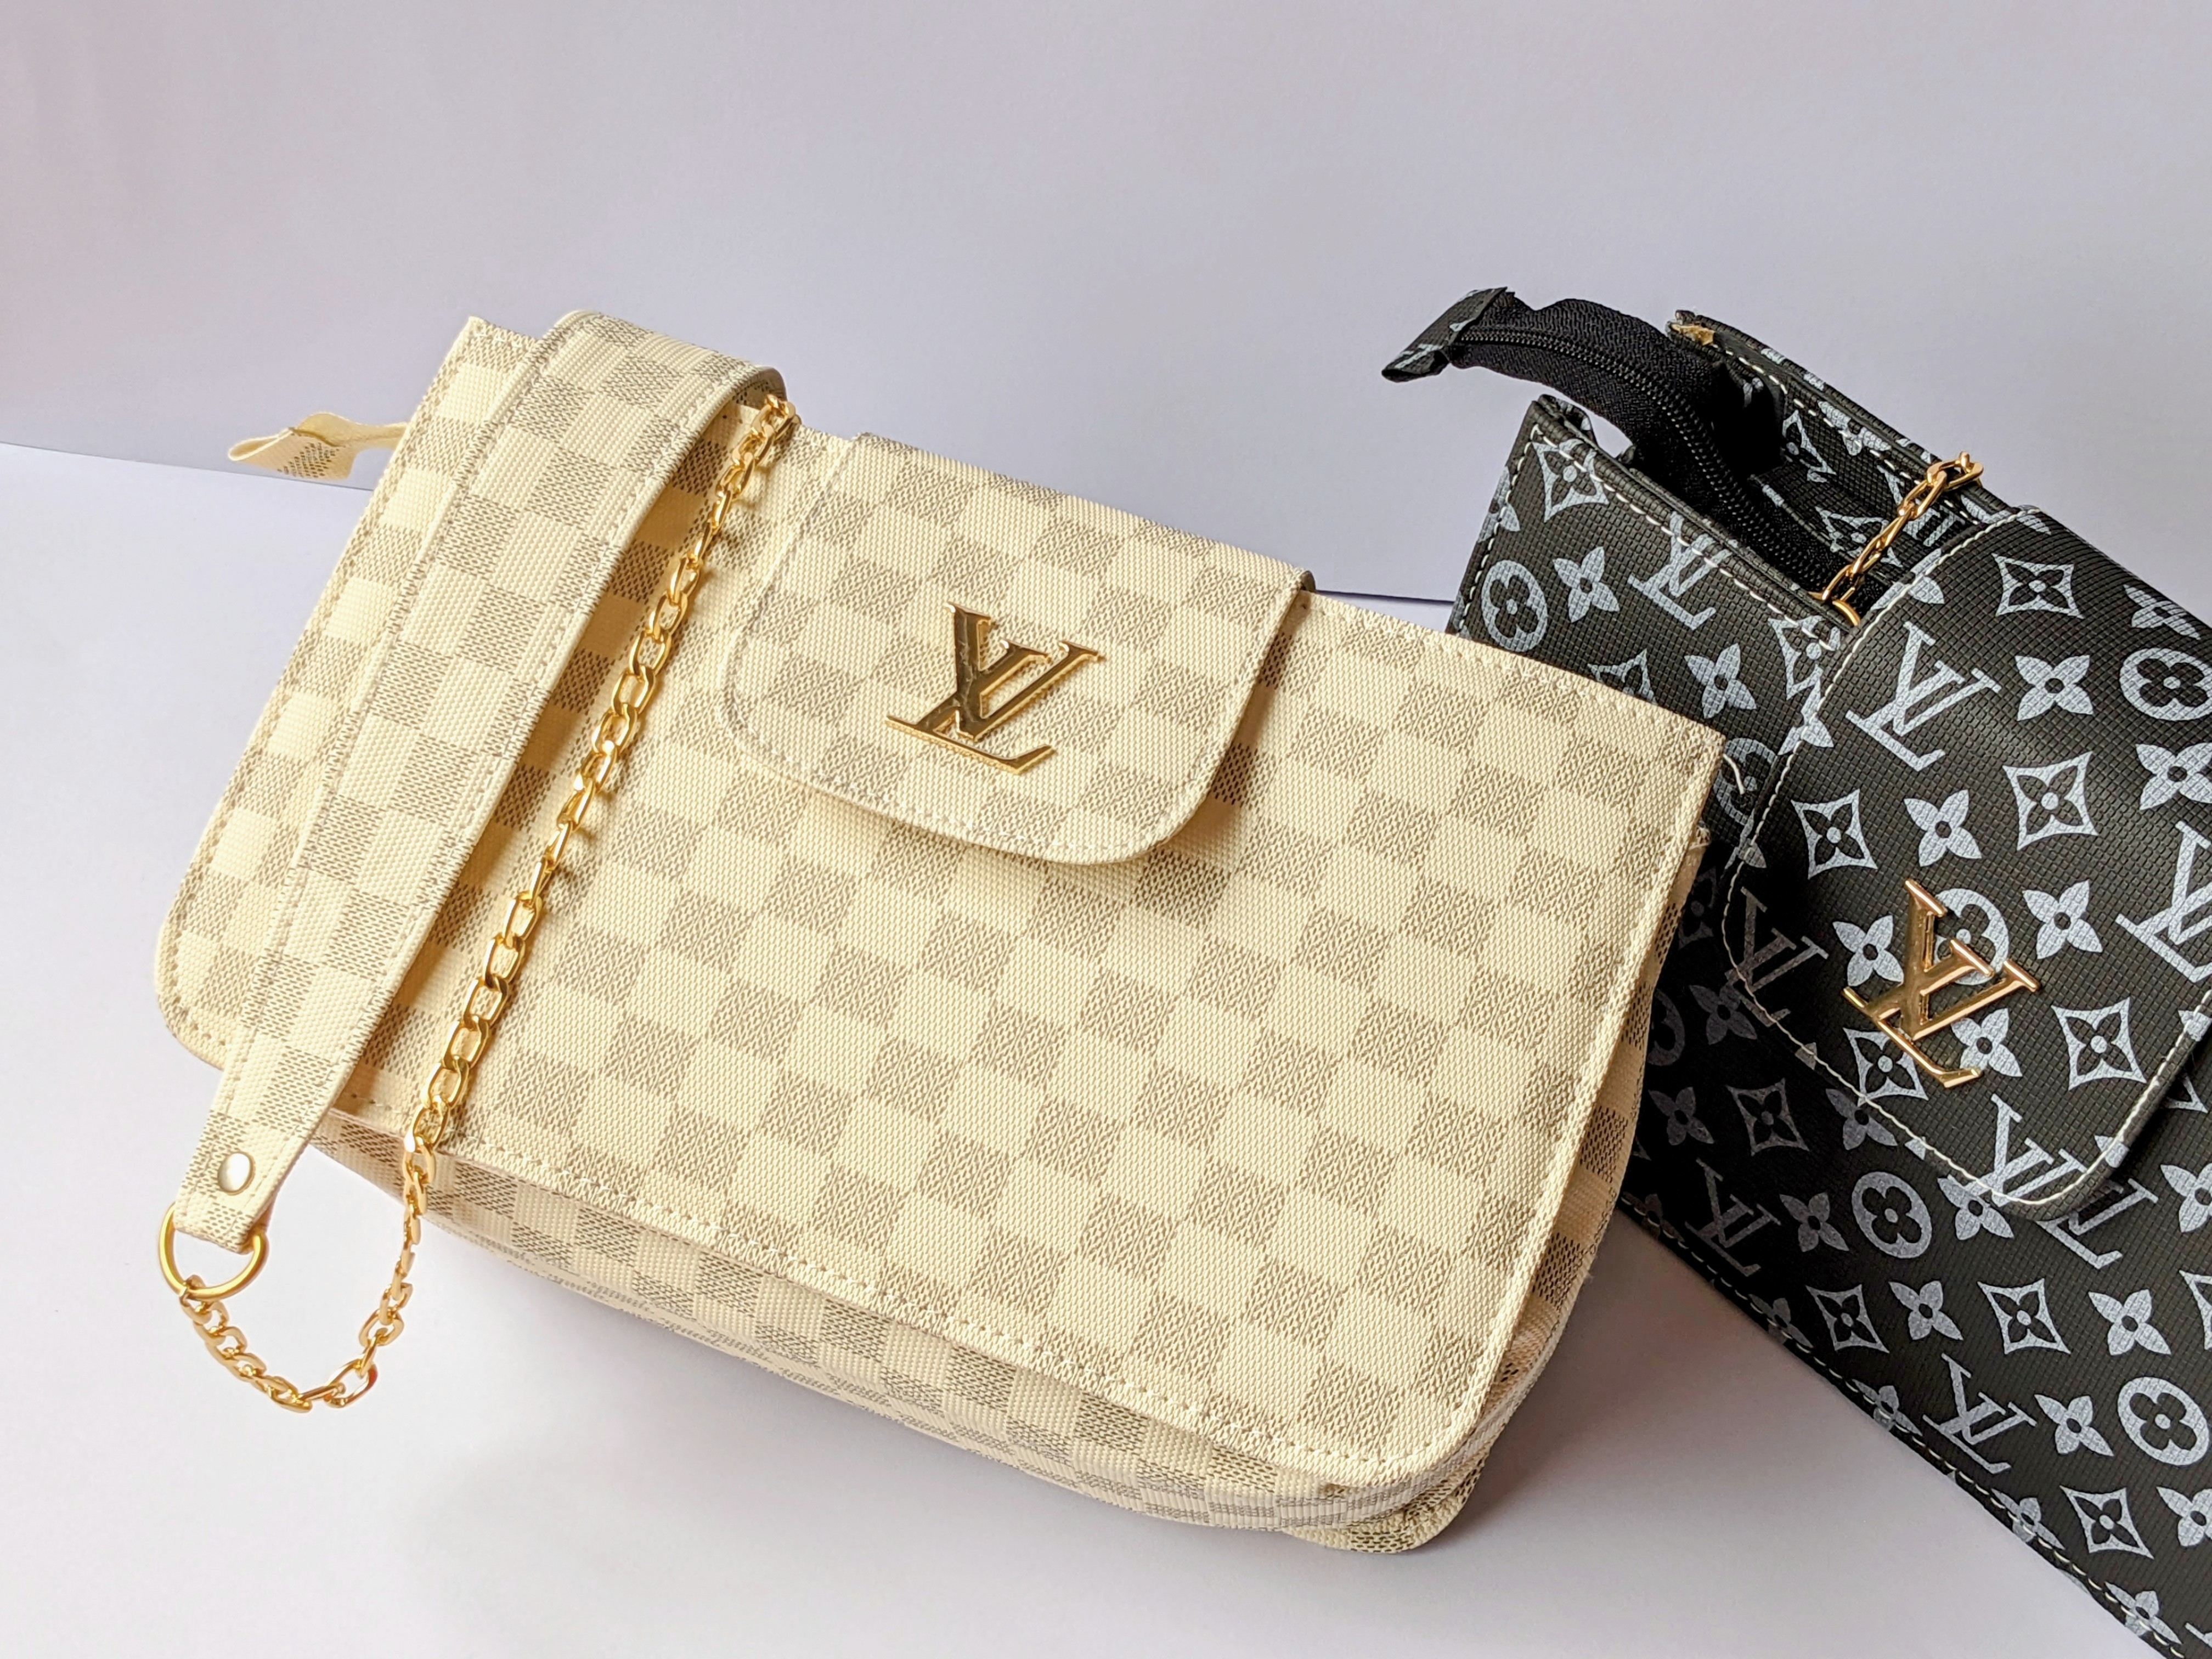 Buy online Lv Handbag Long Strap With Box In Pakistan